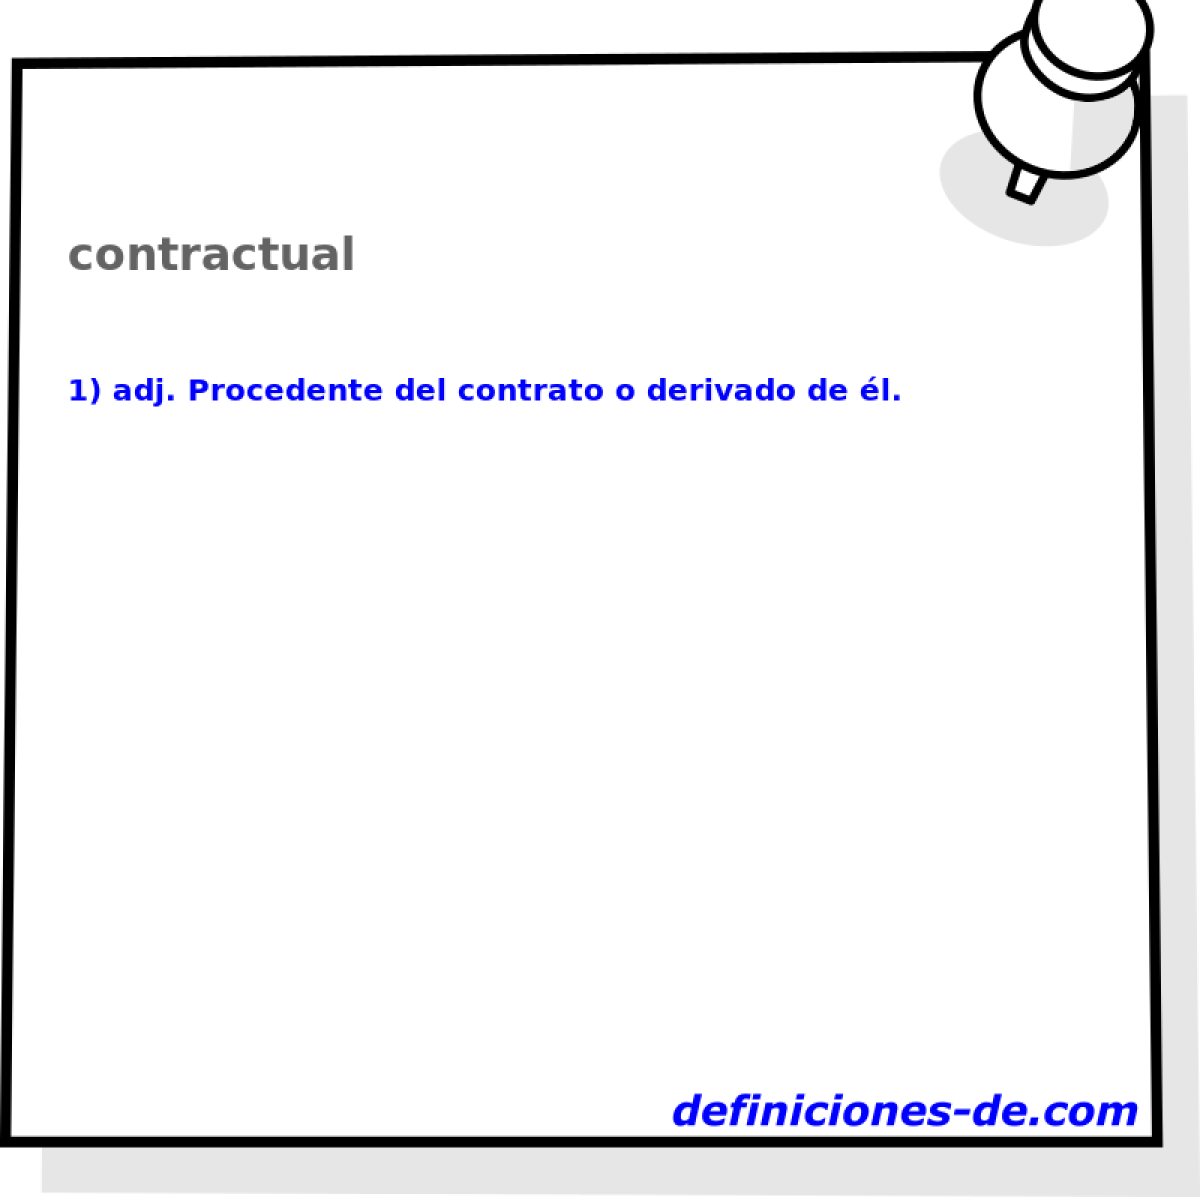 contractual 